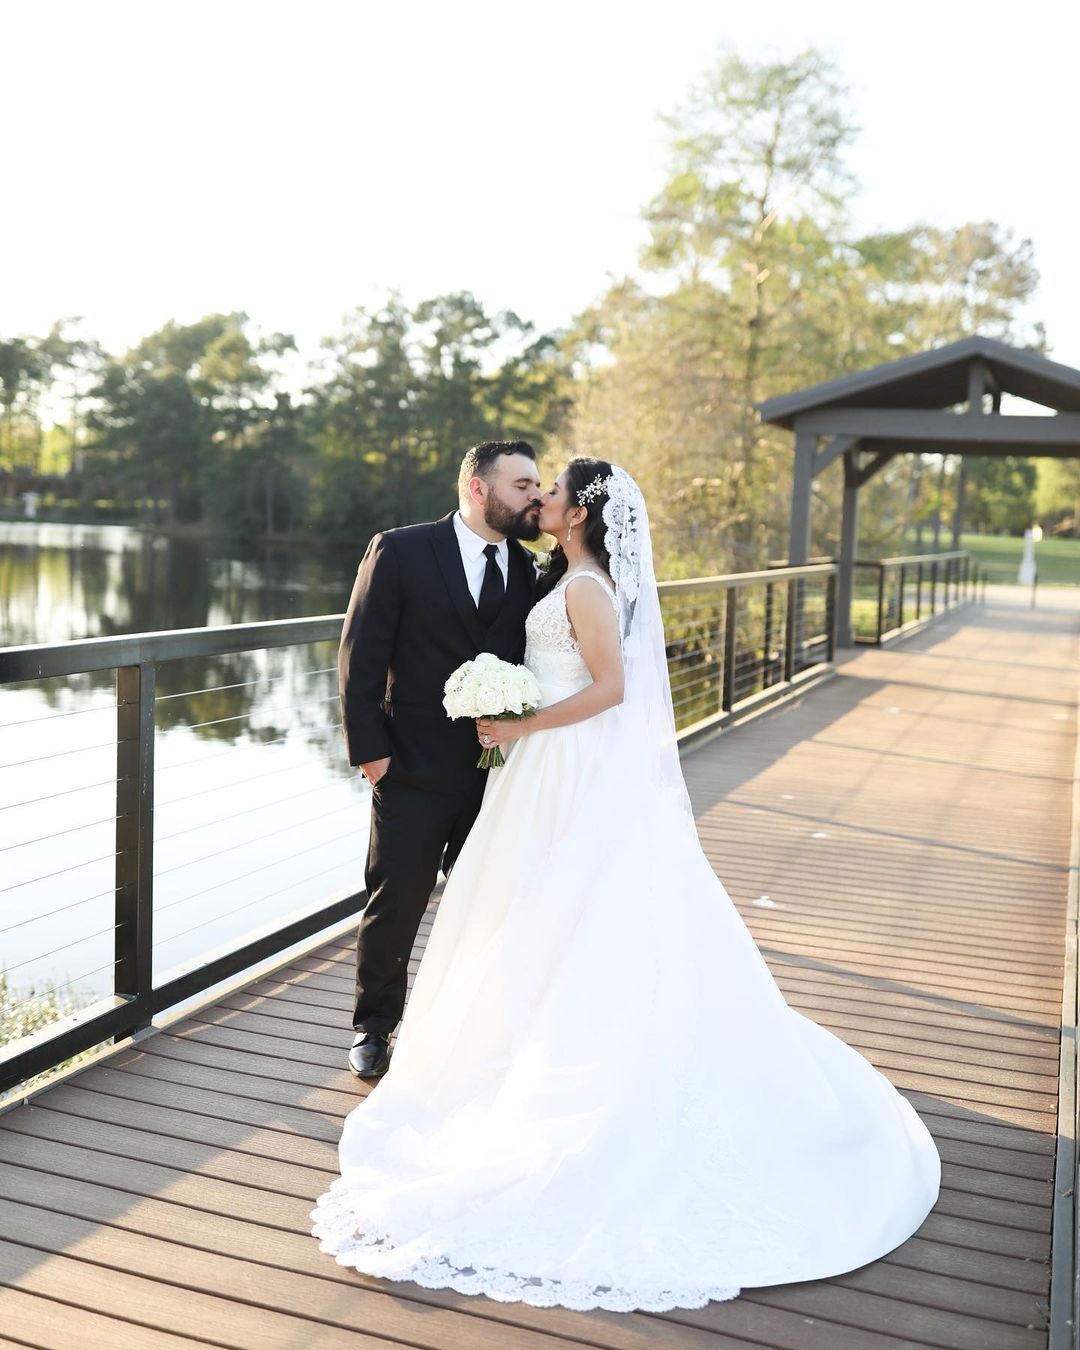 All-Inclusive Wedding Venues in Houston - Hidden Pines | Lake Houston